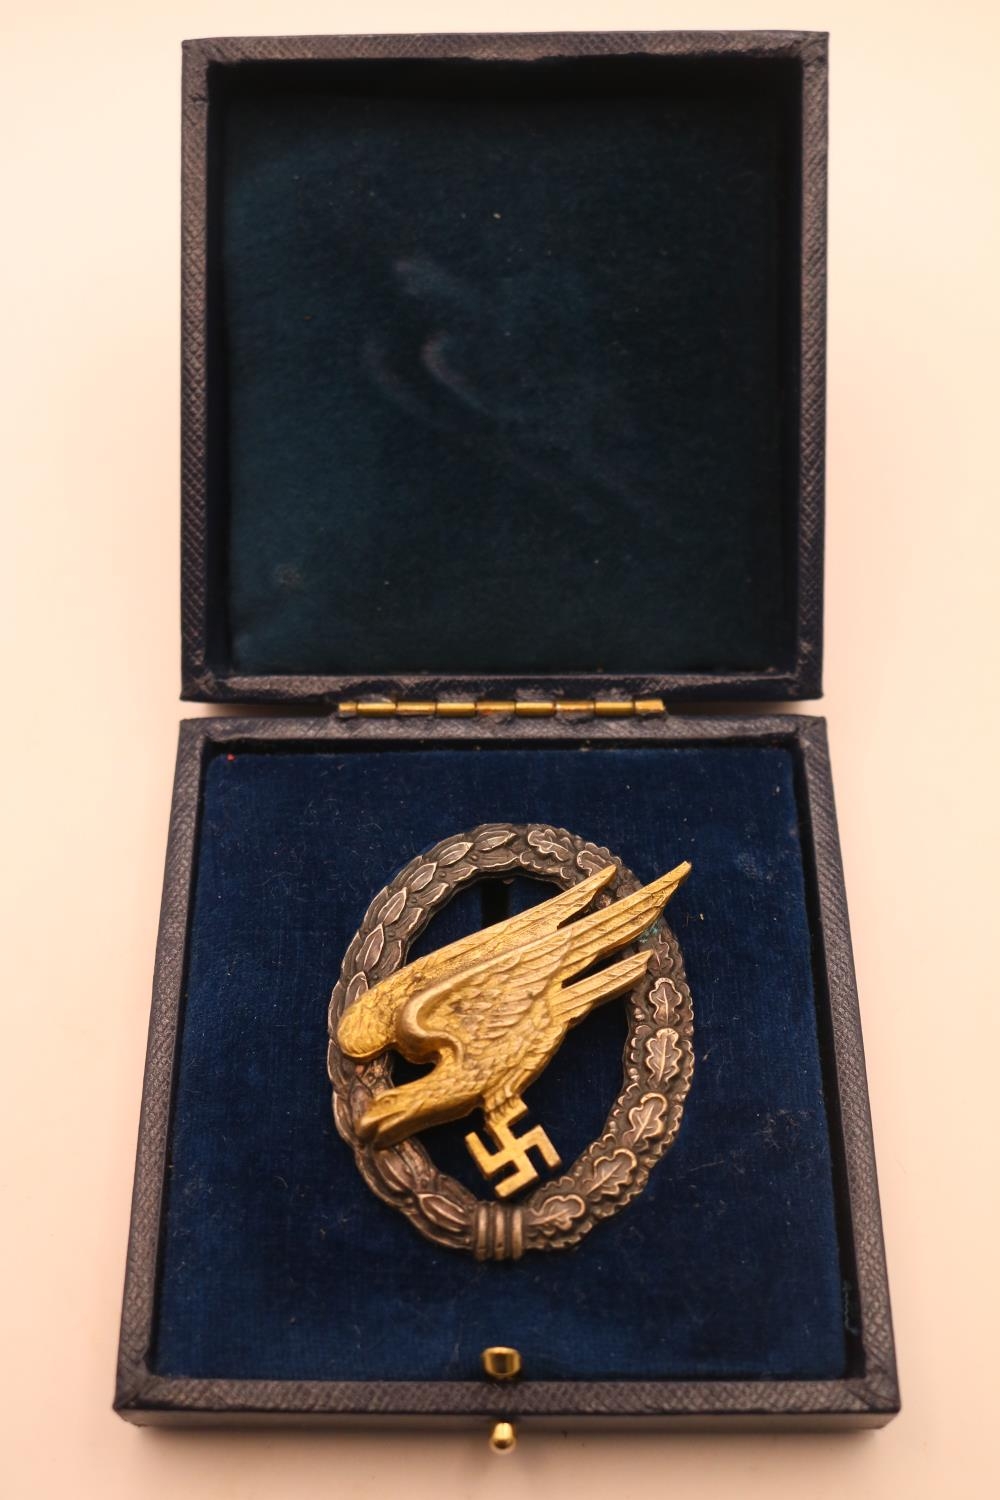 Early World War Two German Third Reich Luftwaffe Fallschirmjager (Paratrooper) Parachutist Badge - Image 2 of 5